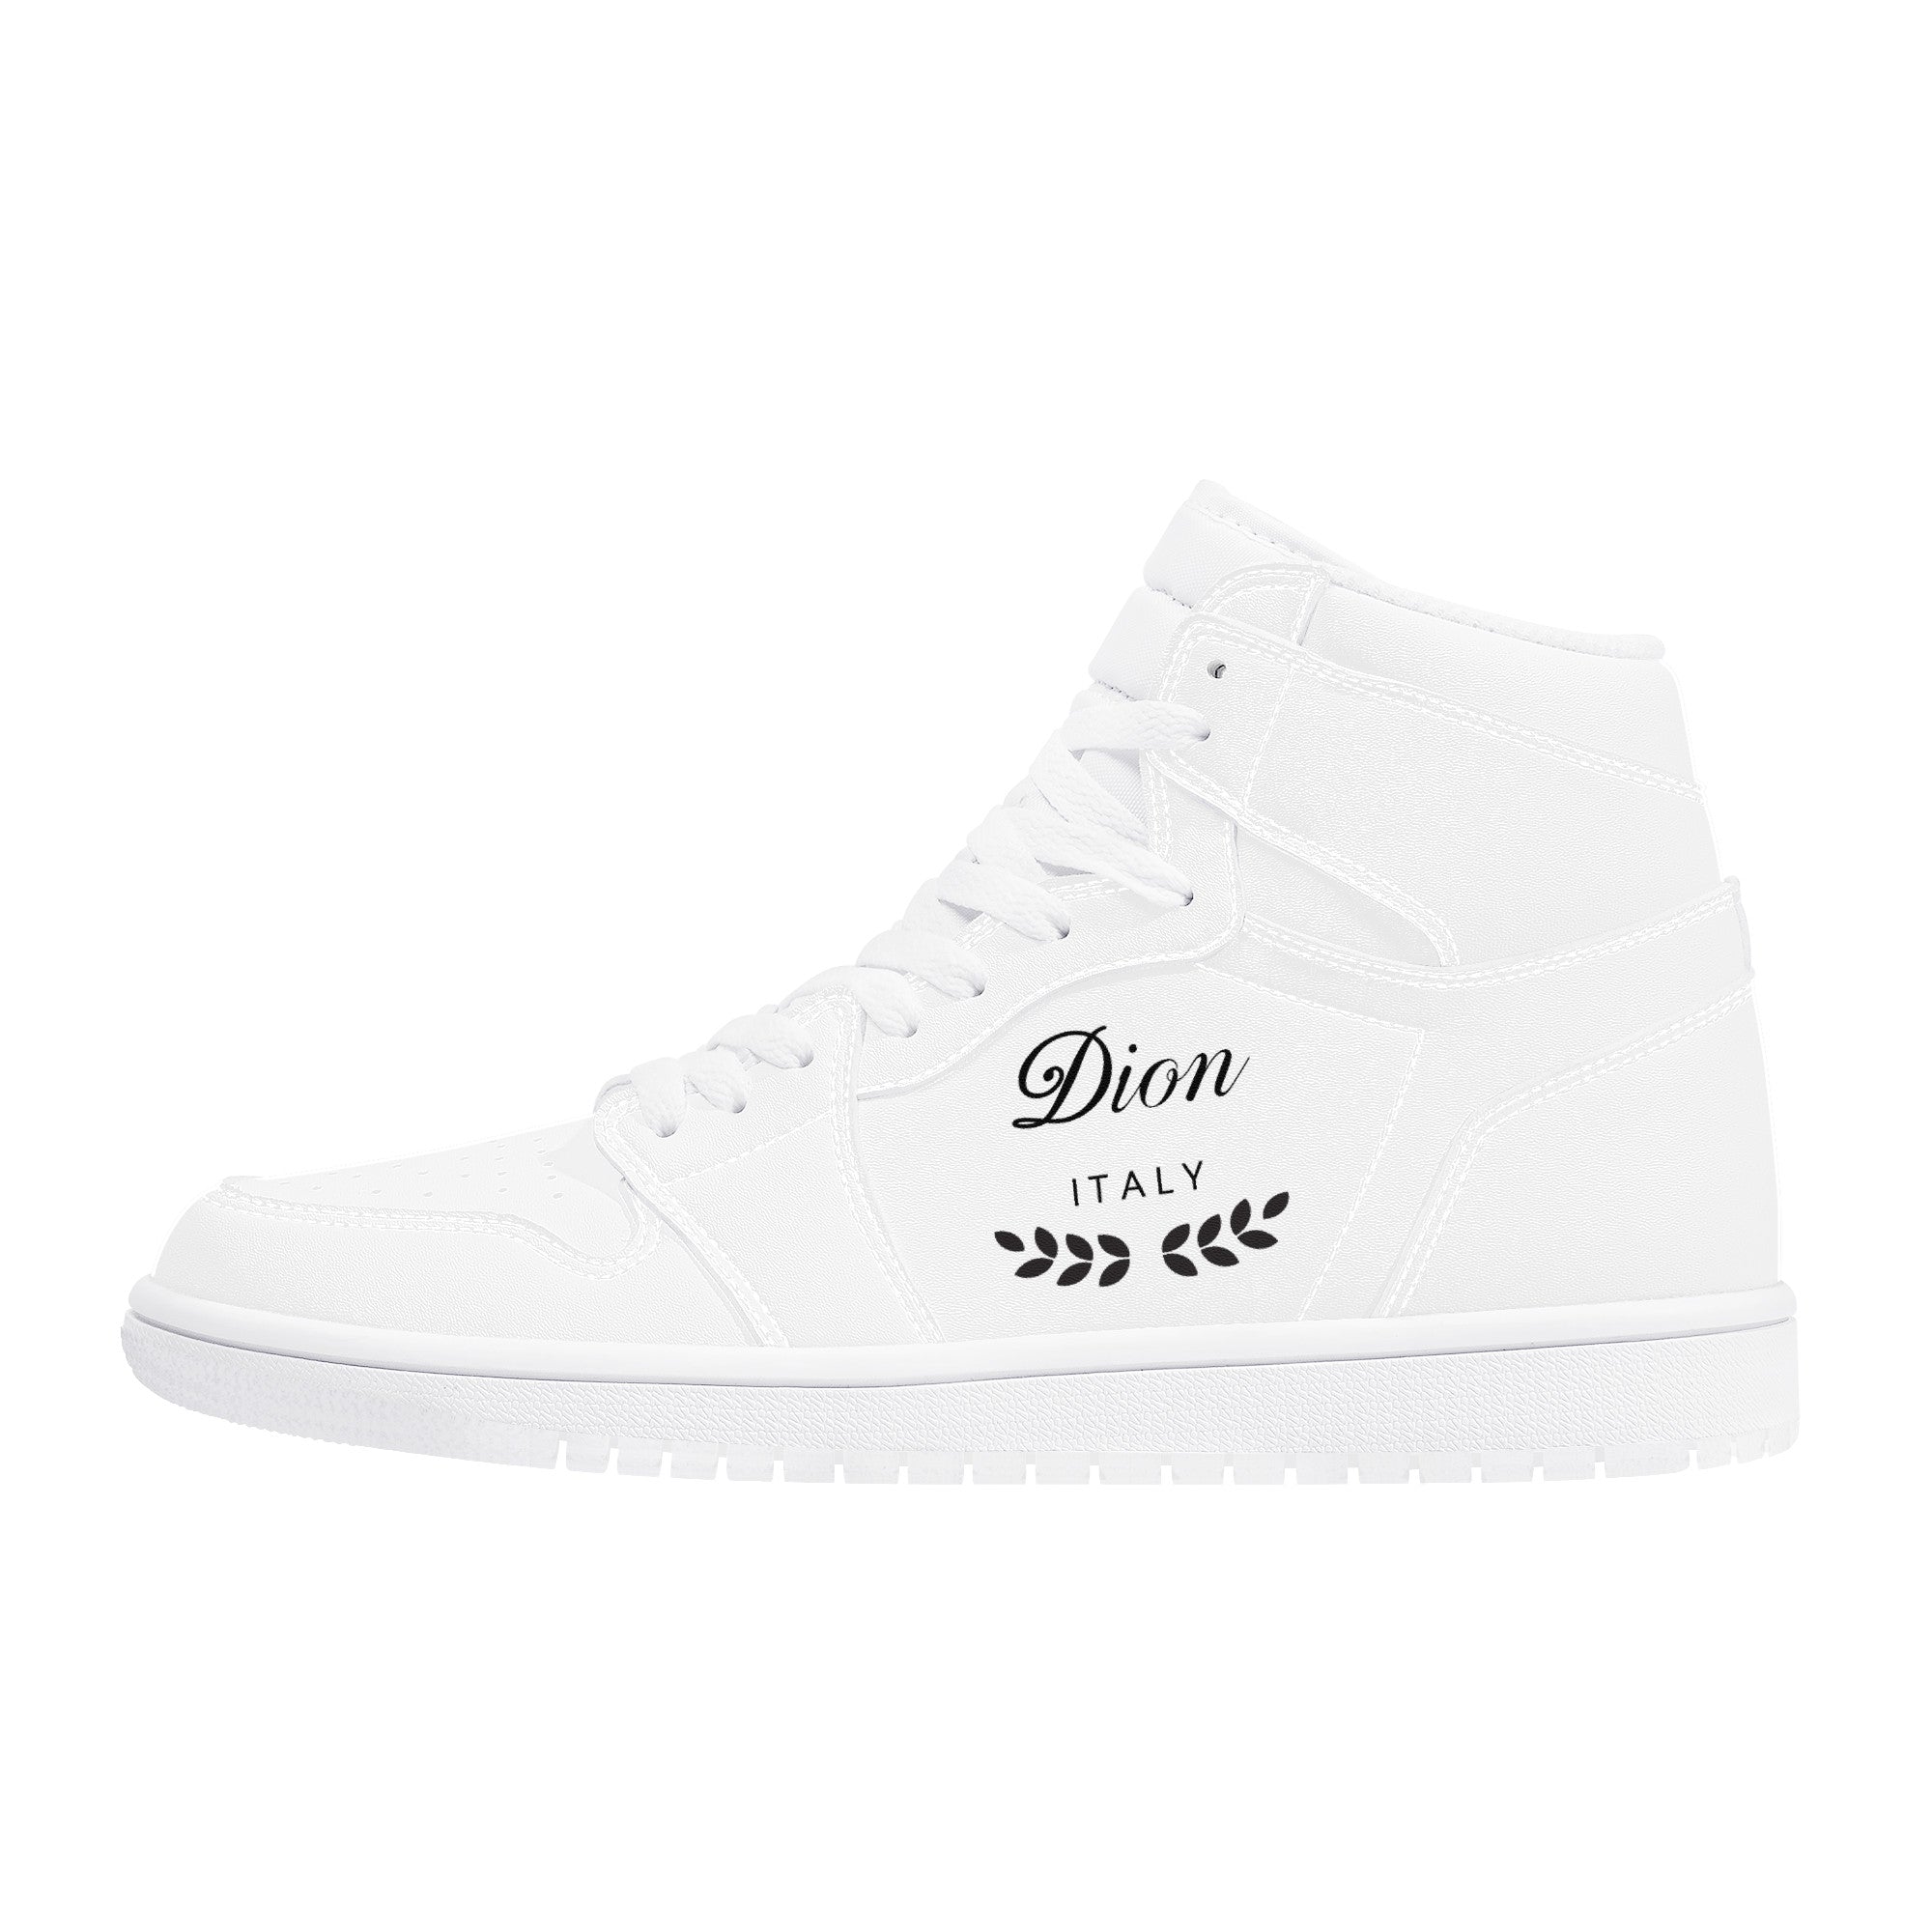 Dion Italy's | Custom Branded Company Shoes | Shoe Zero